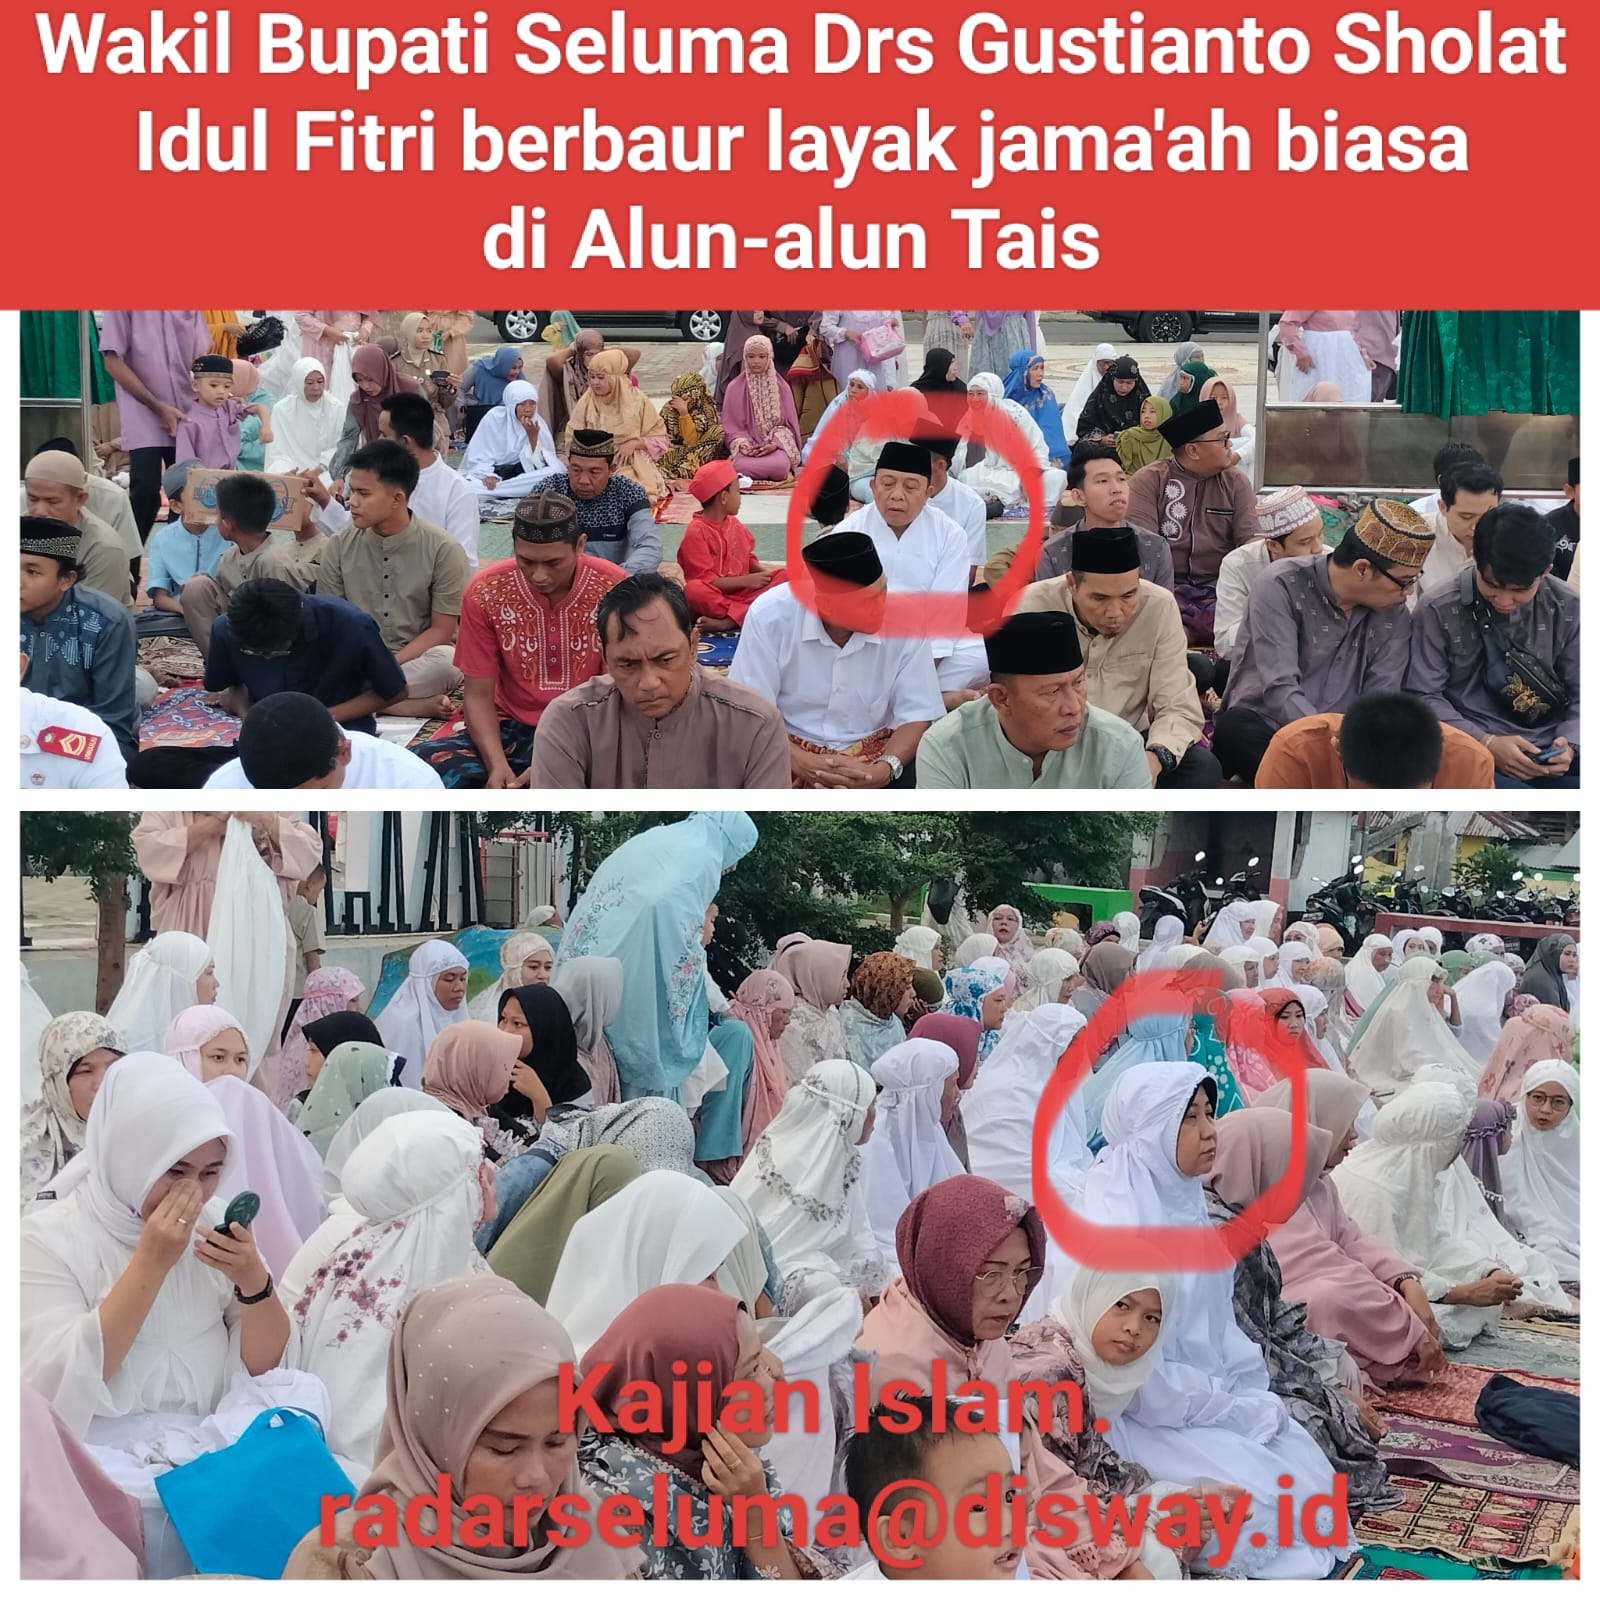 Wakil Bupati Seluma Drs Gustianto beserta Istri Sholat Idul Fitri Di Alun-alun Tais